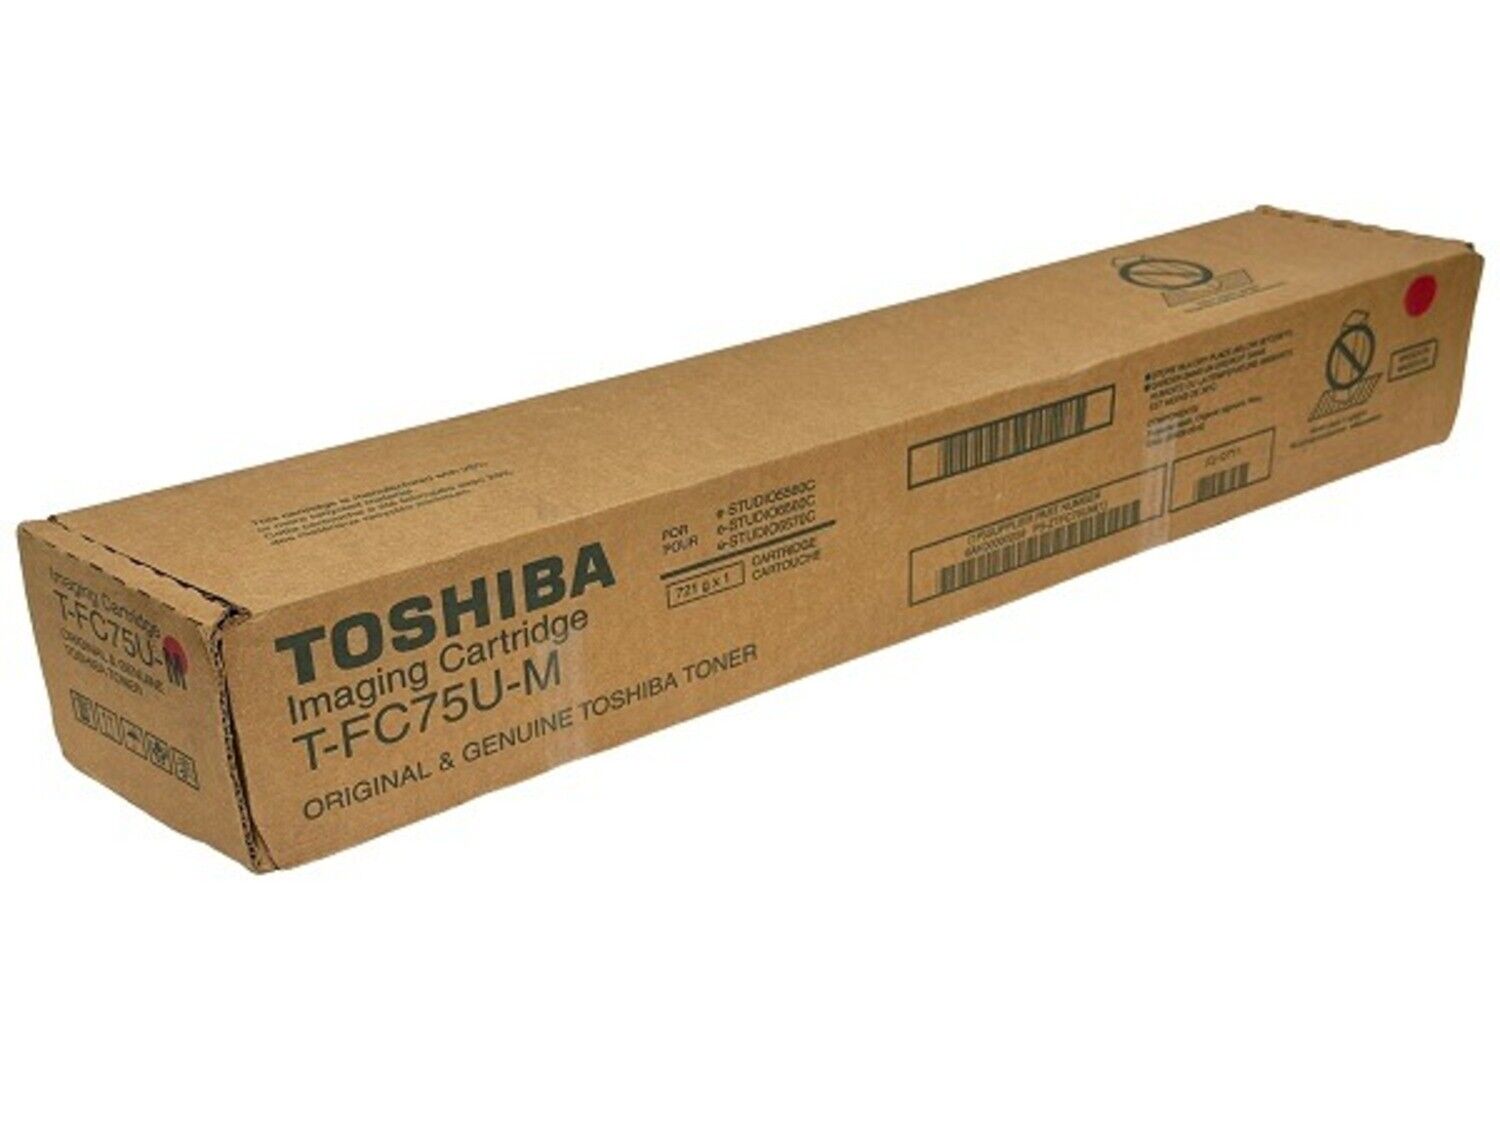 Genuine Toshiba T-FC75U-M Magenta Toner Cartridge